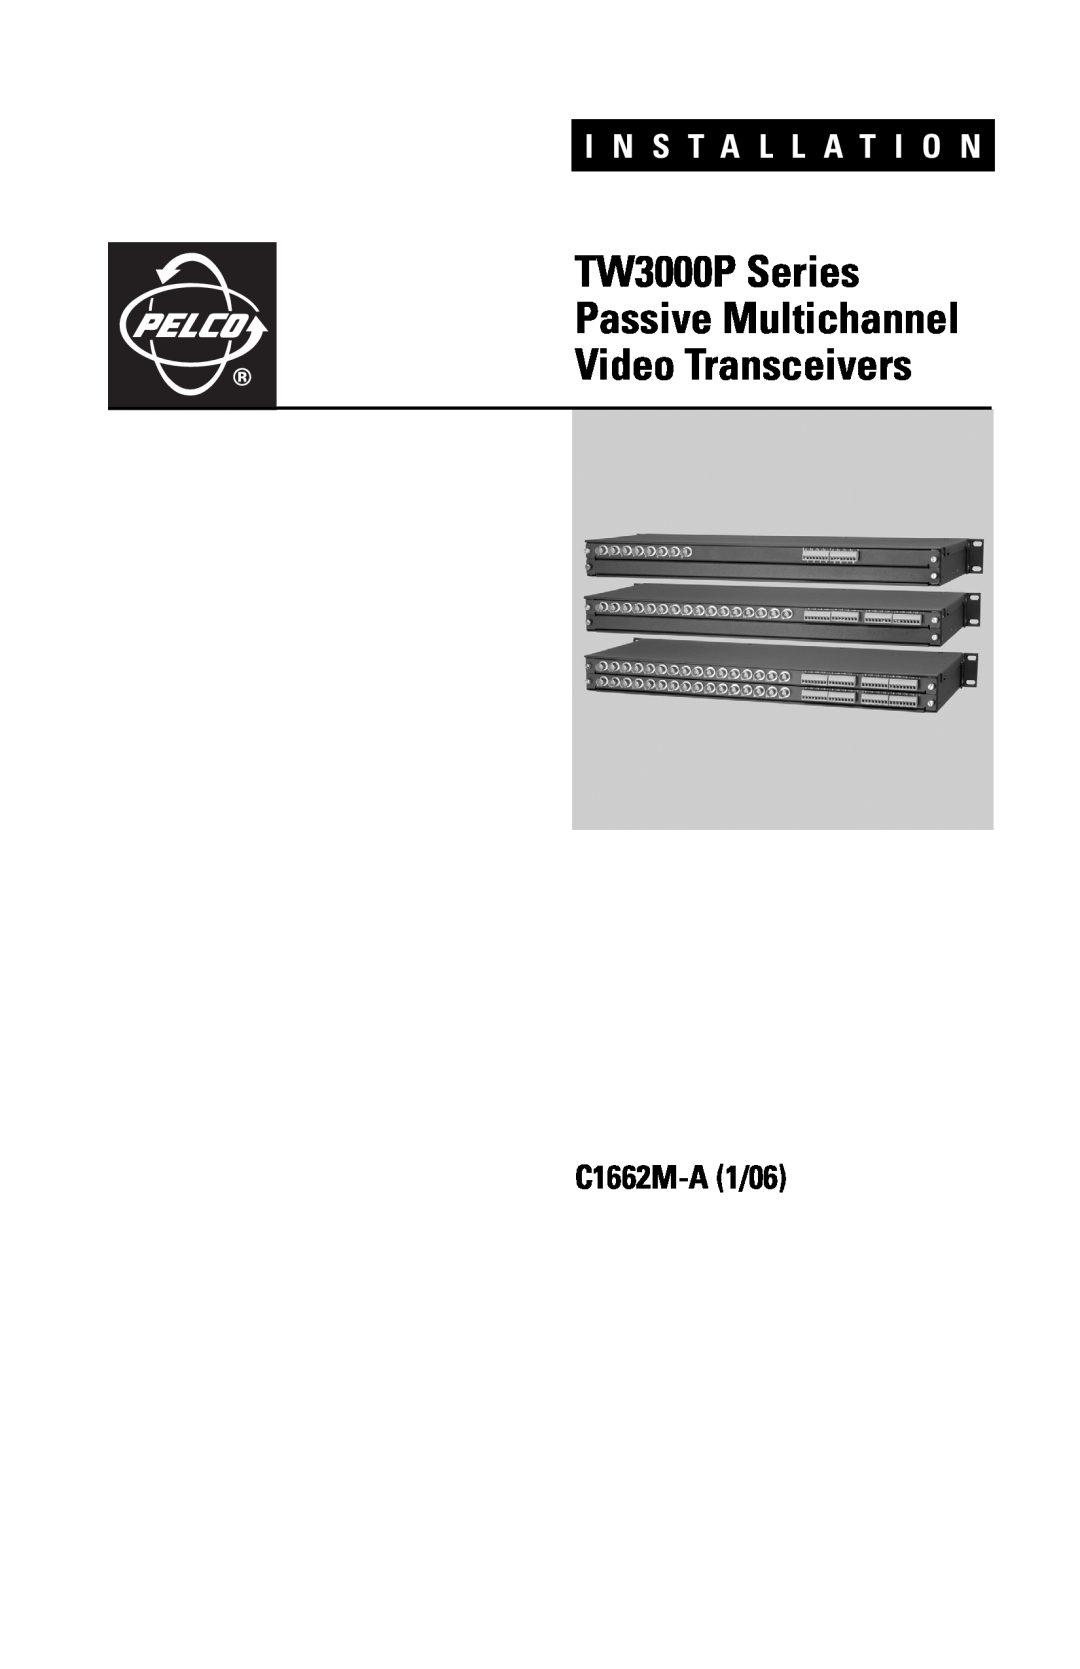 Pelco manual TW3000P Series Passive Multichannel, Video Transceivers, C1662M-A1/06, I N S T A L L A T I O N 